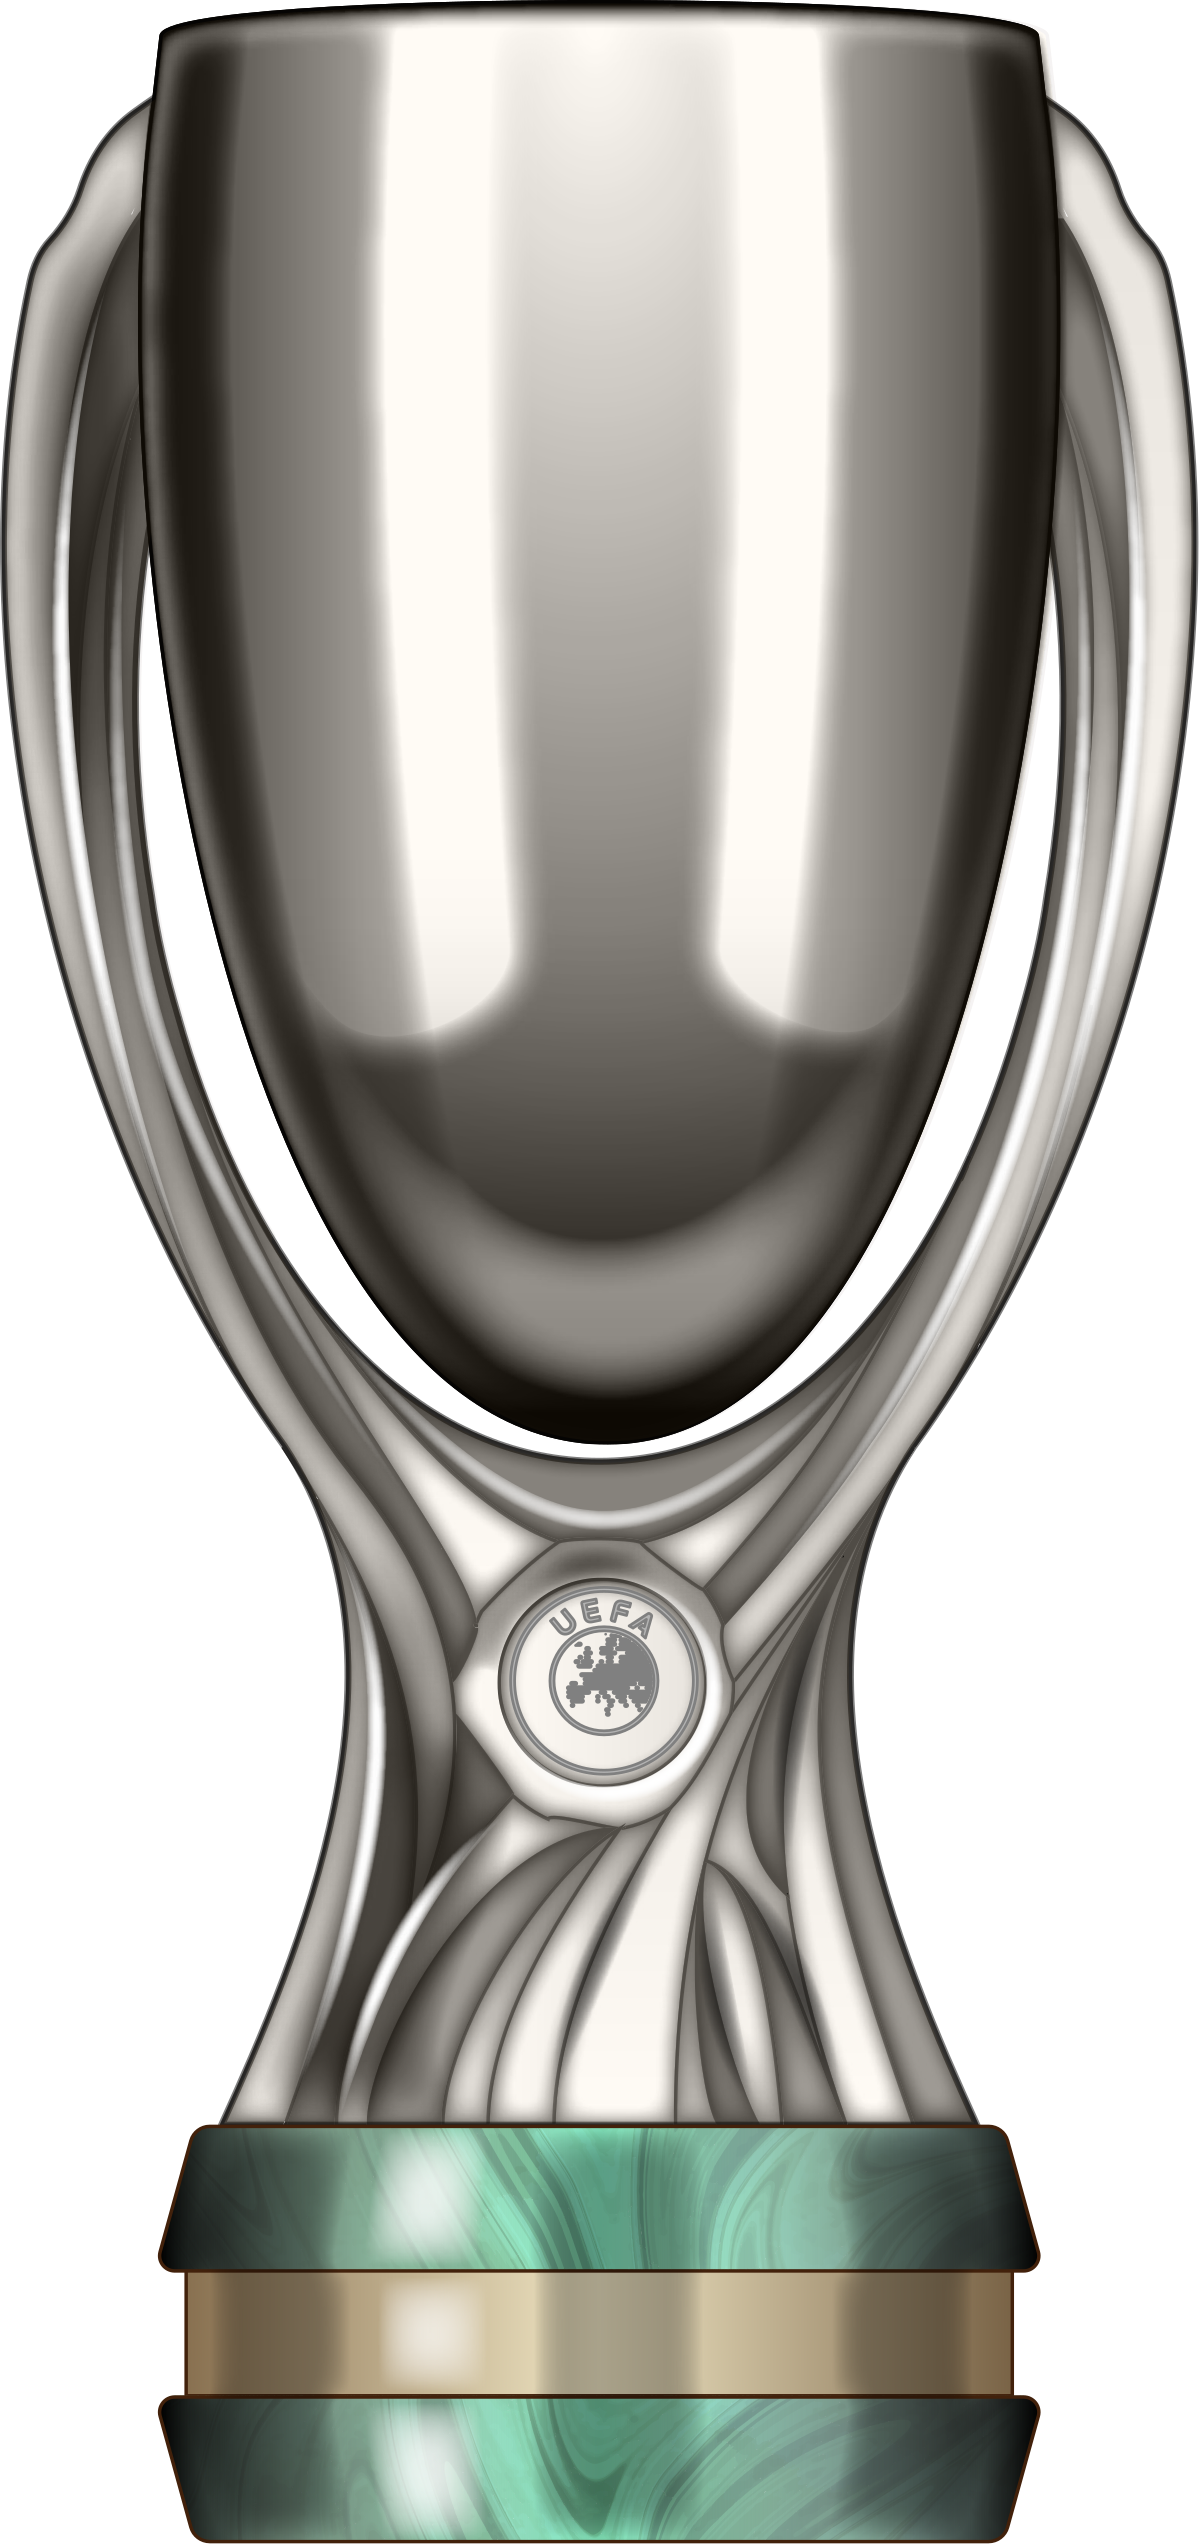 File:Supercoppa UEFA.svg - Wikipedia